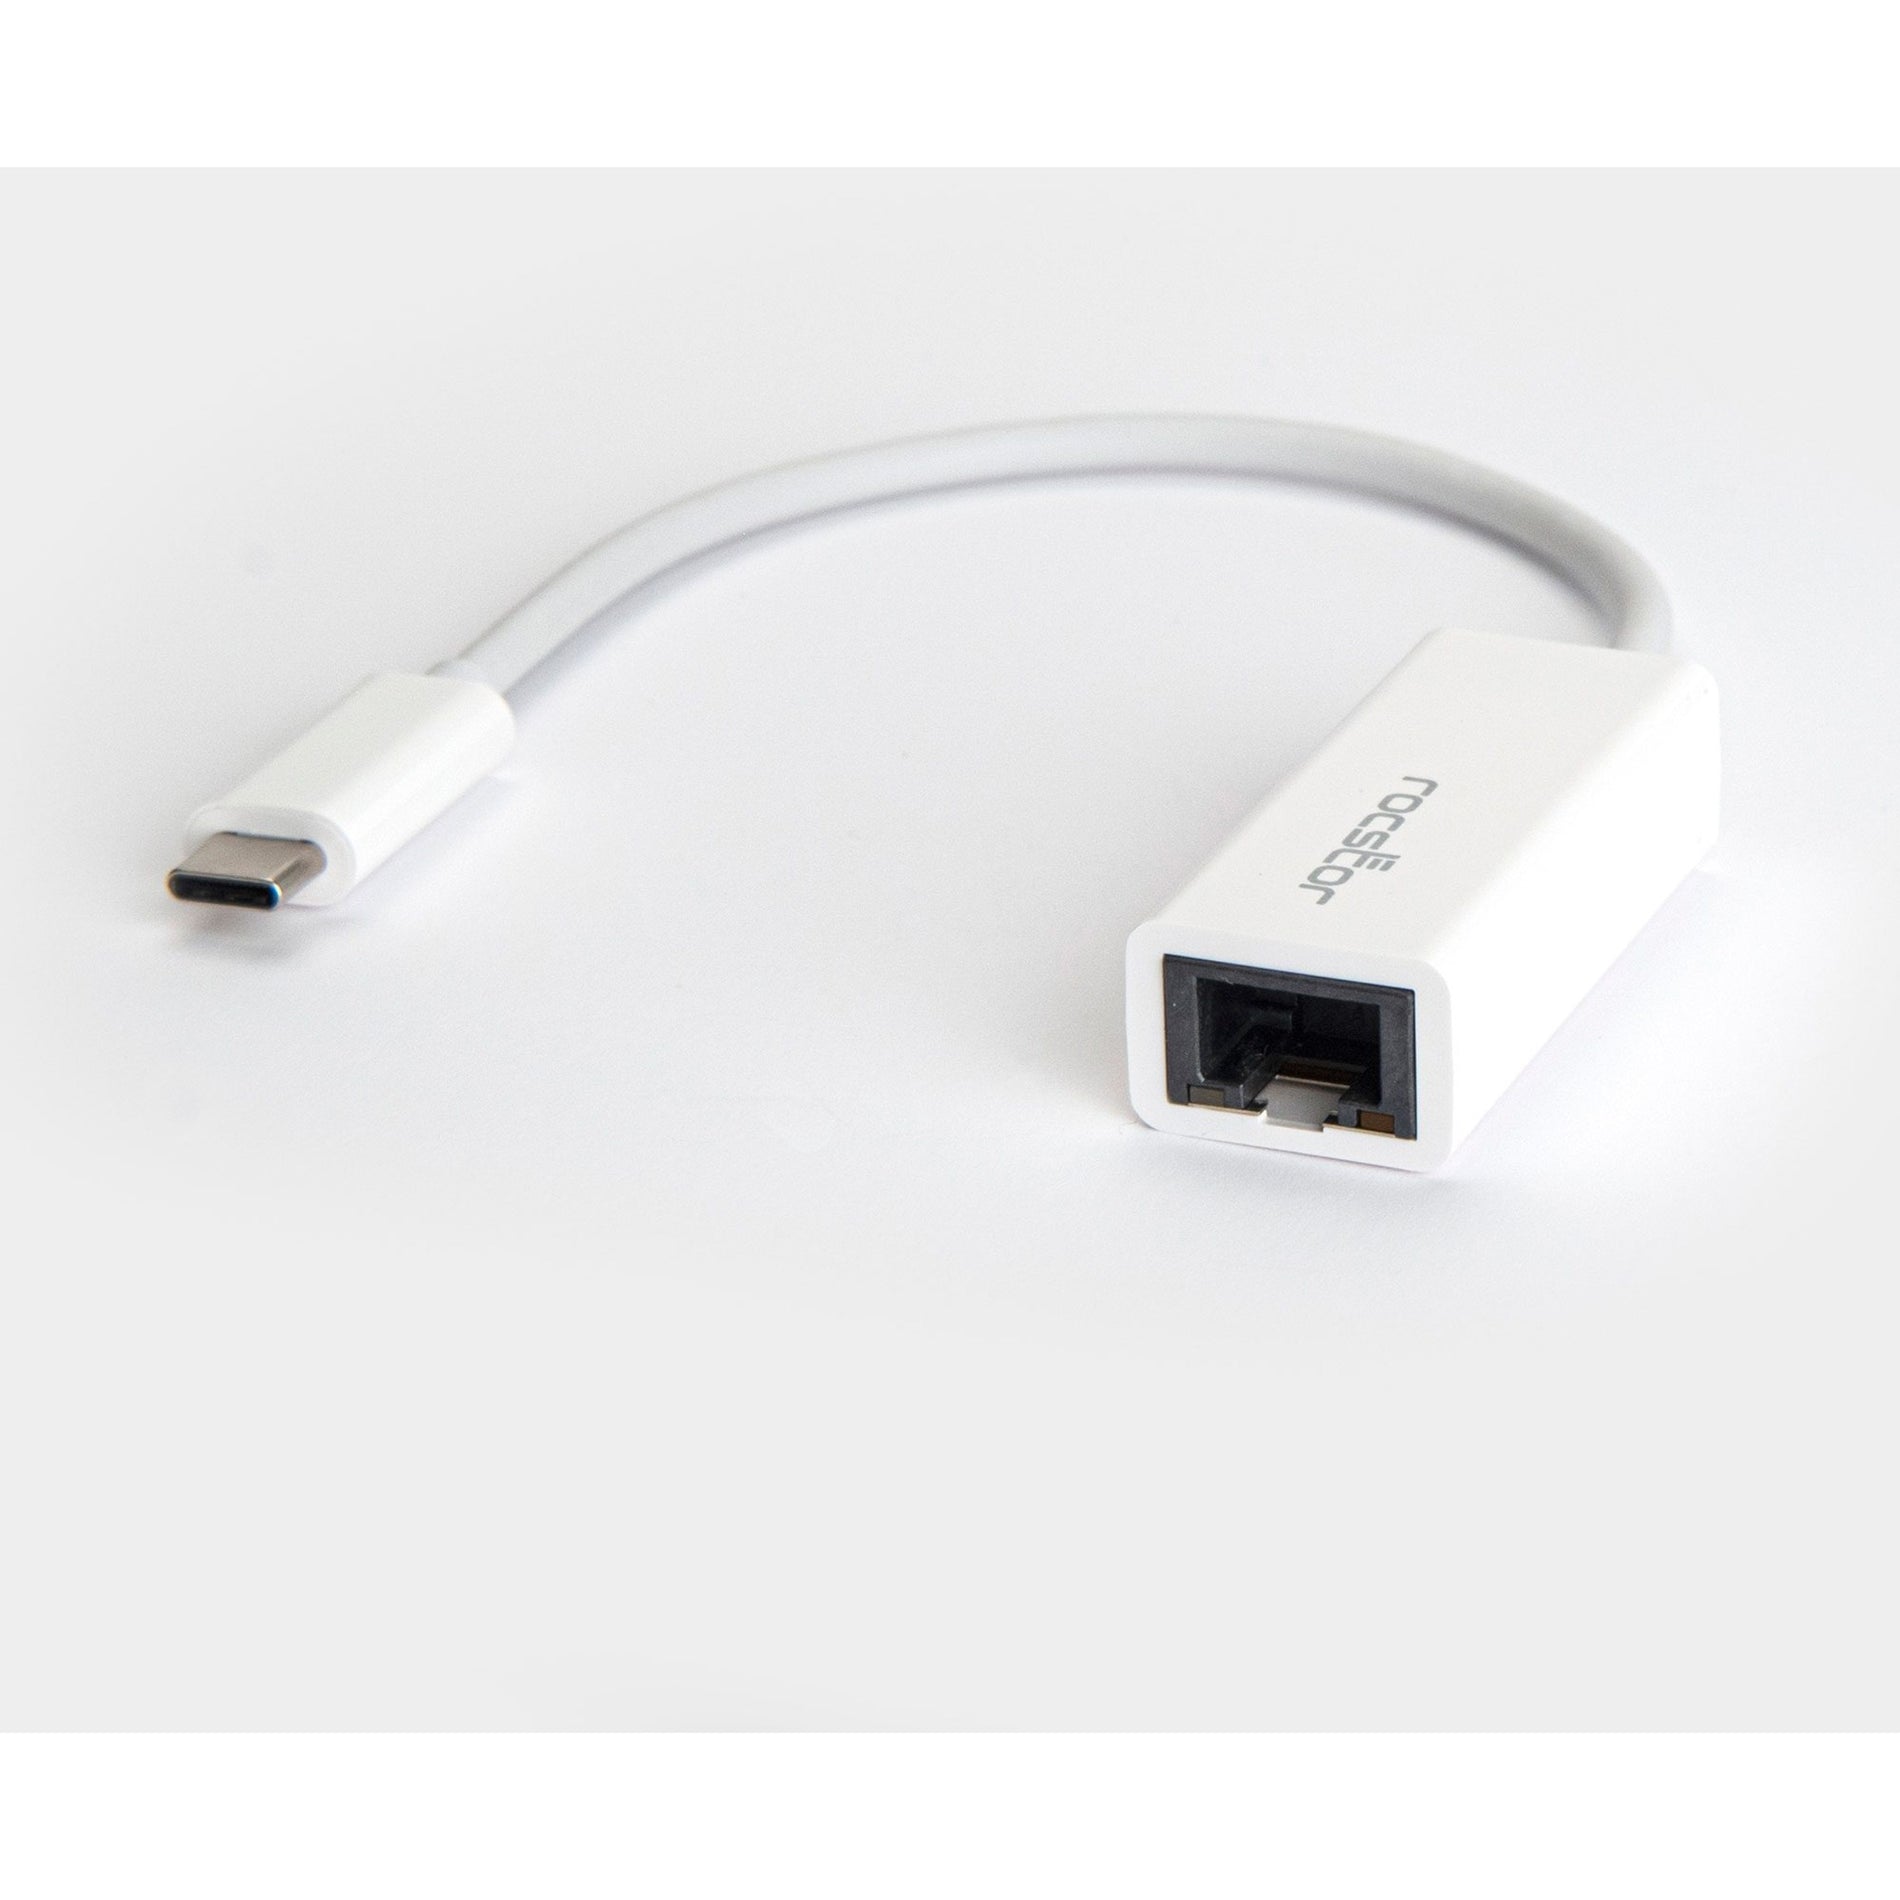 Rocstor Y10A173-W1 Premium USB-C to Gigabit 10/100/1000 Network Adapter - White, USB-C 3.1 to Gigabit 1000Mbps